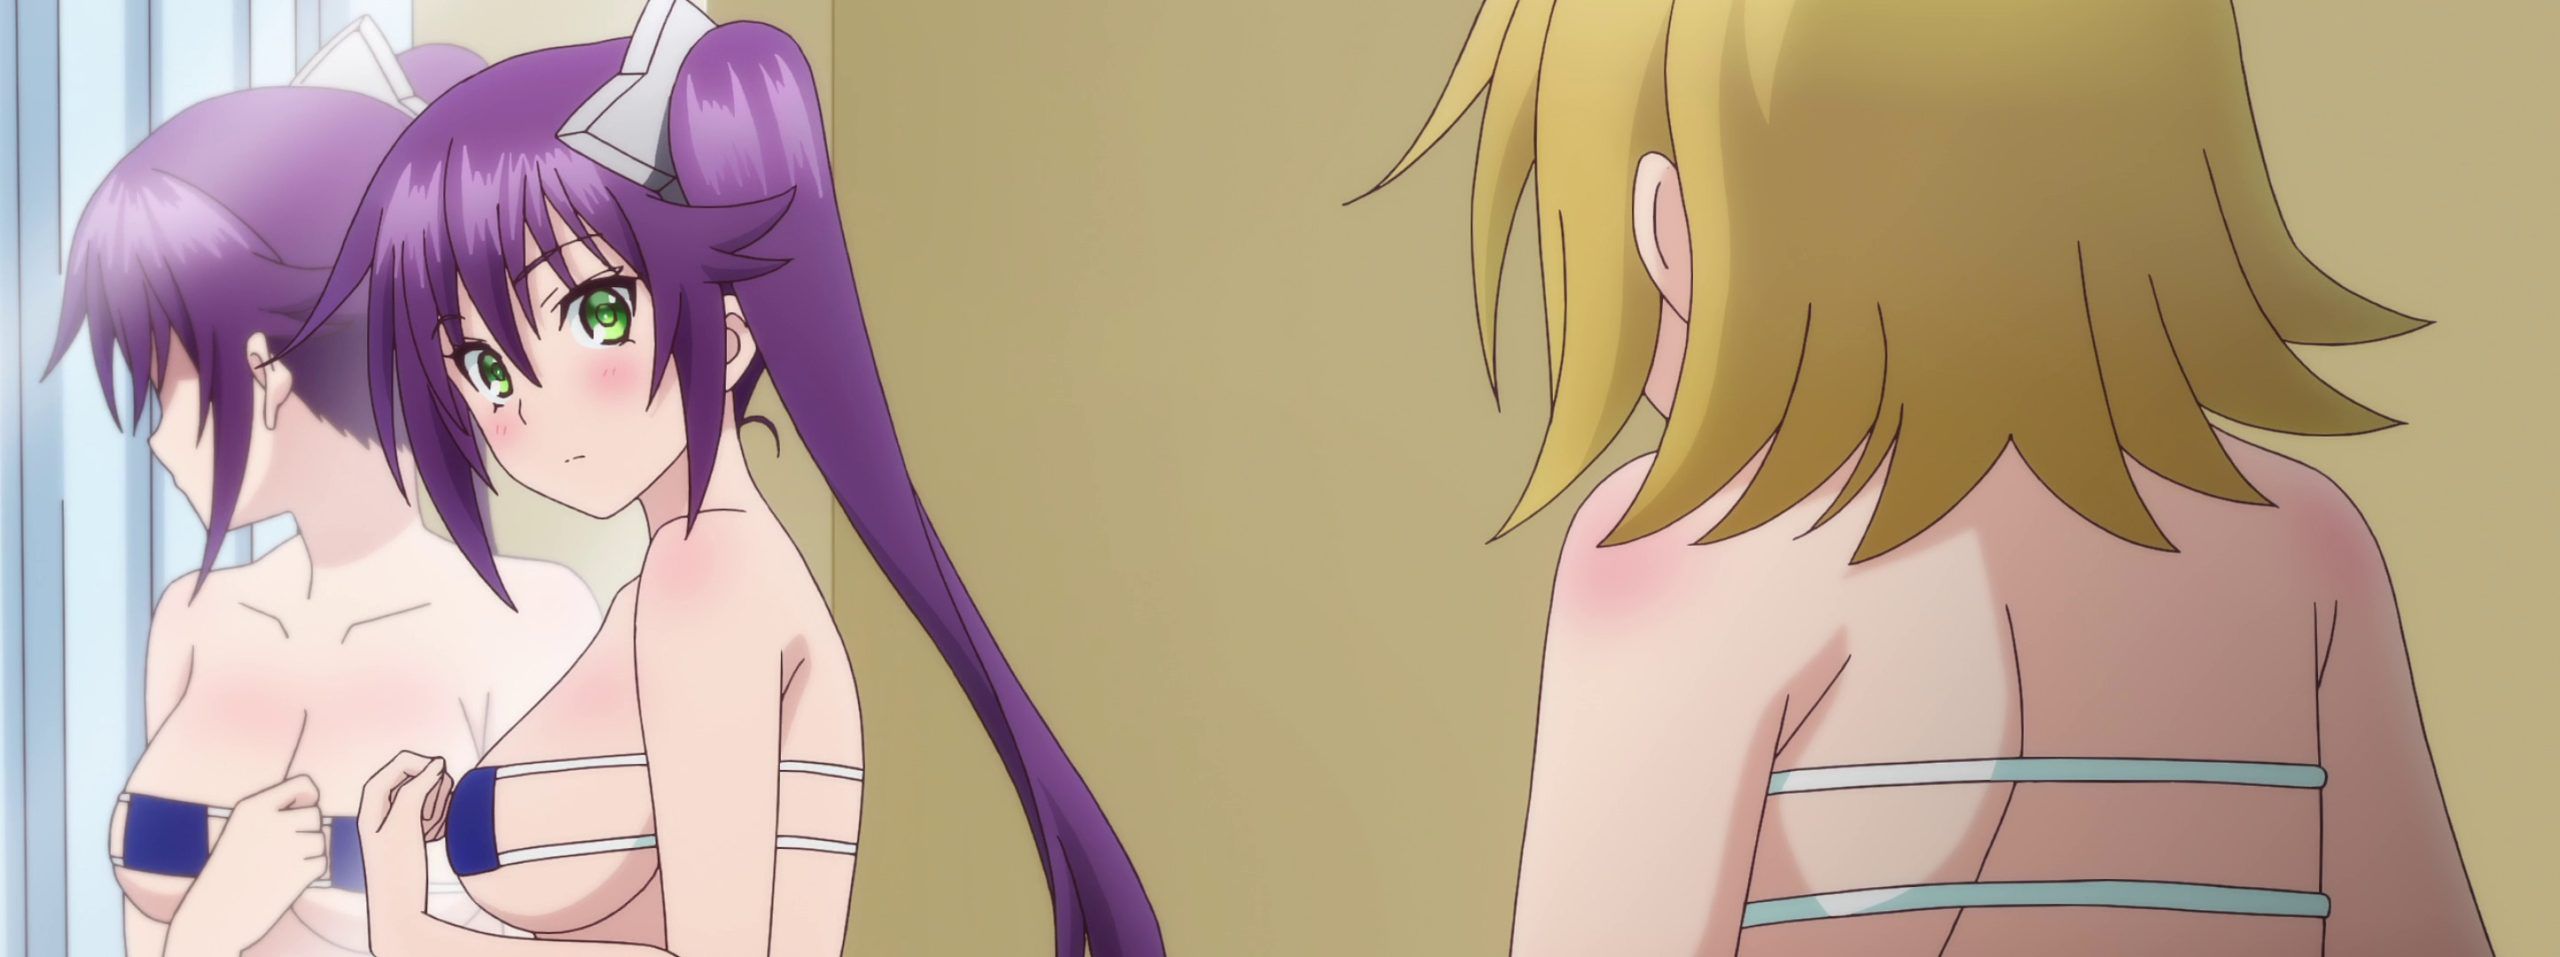 [Yuragiso's Yuna-san] erotic image summary of heroines such as Yuna-chan Part 12 13